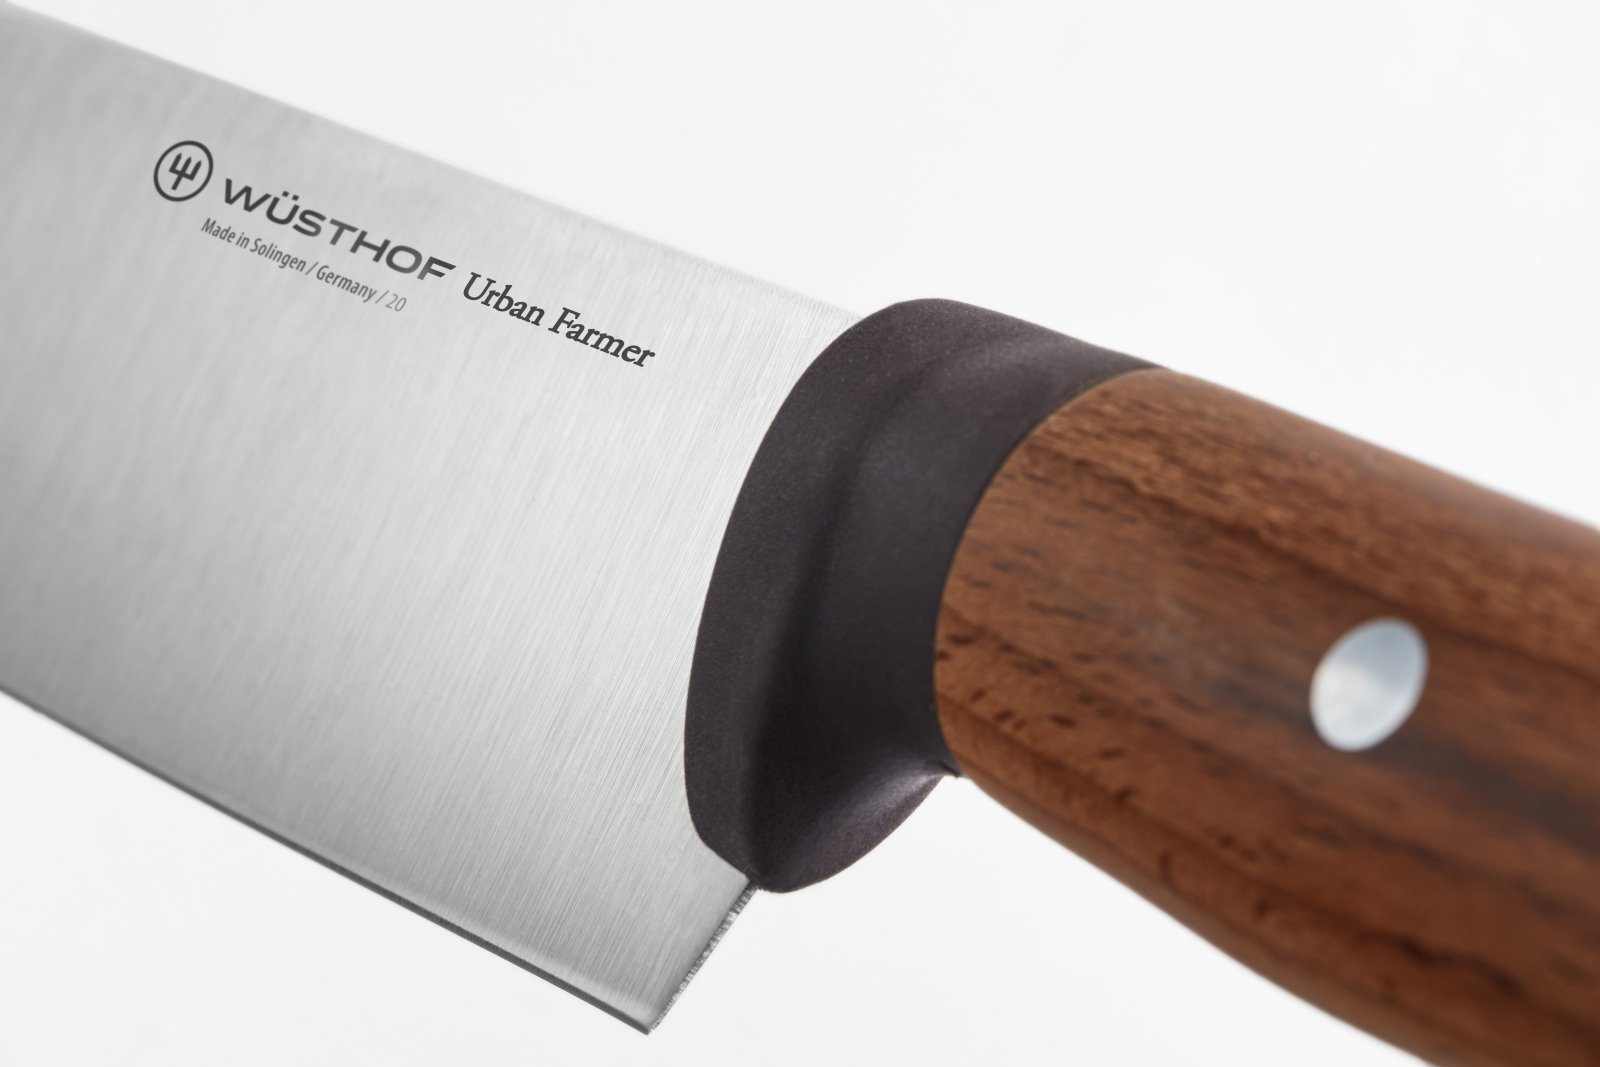 Wusthof Urban Farmer Santoku Knife 17cm - 1025246017 - The Cotswold Knife Company